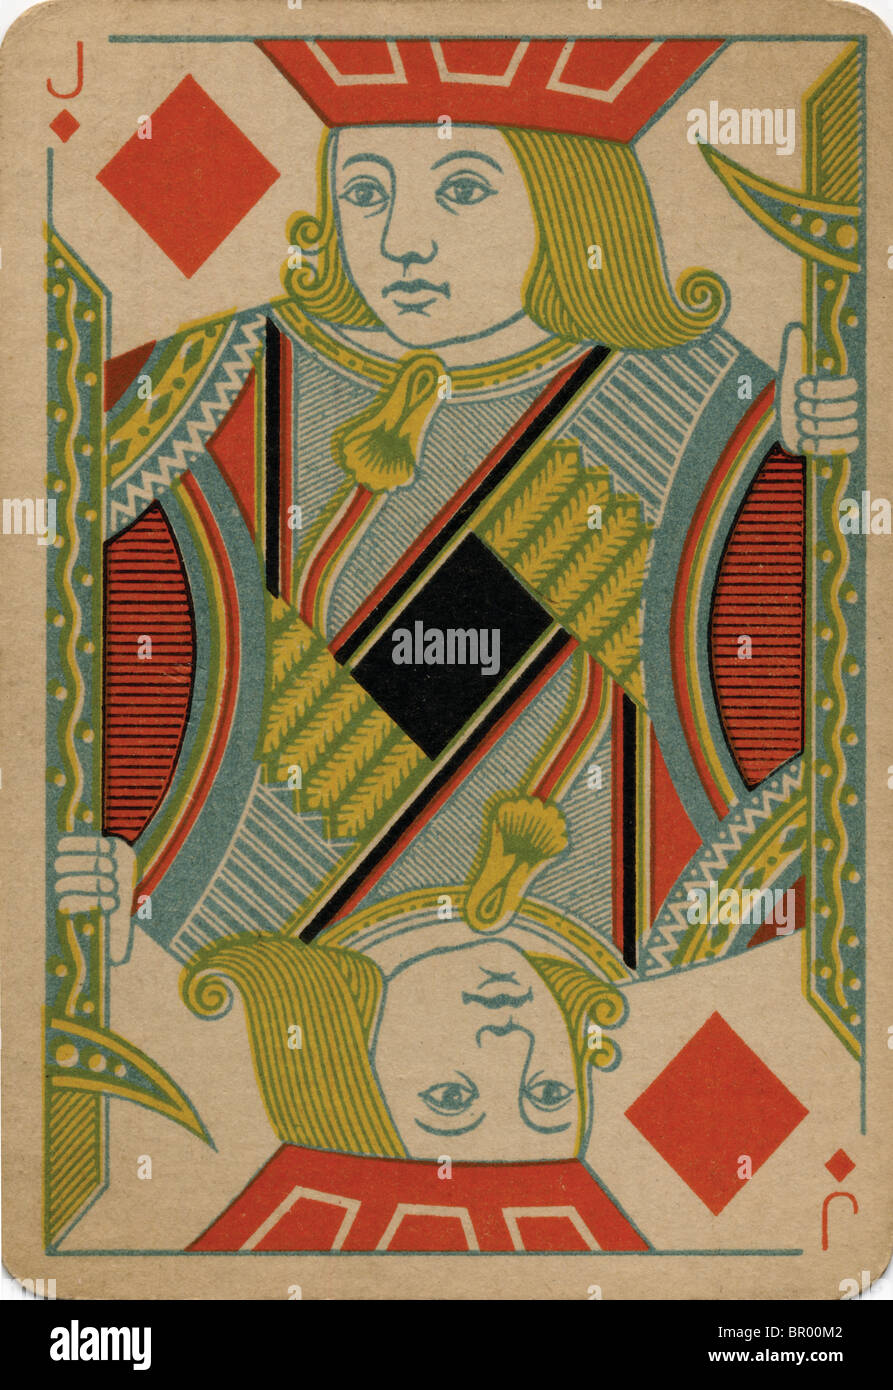 Vintage Spielkarte Karo-Bube Stockfoto